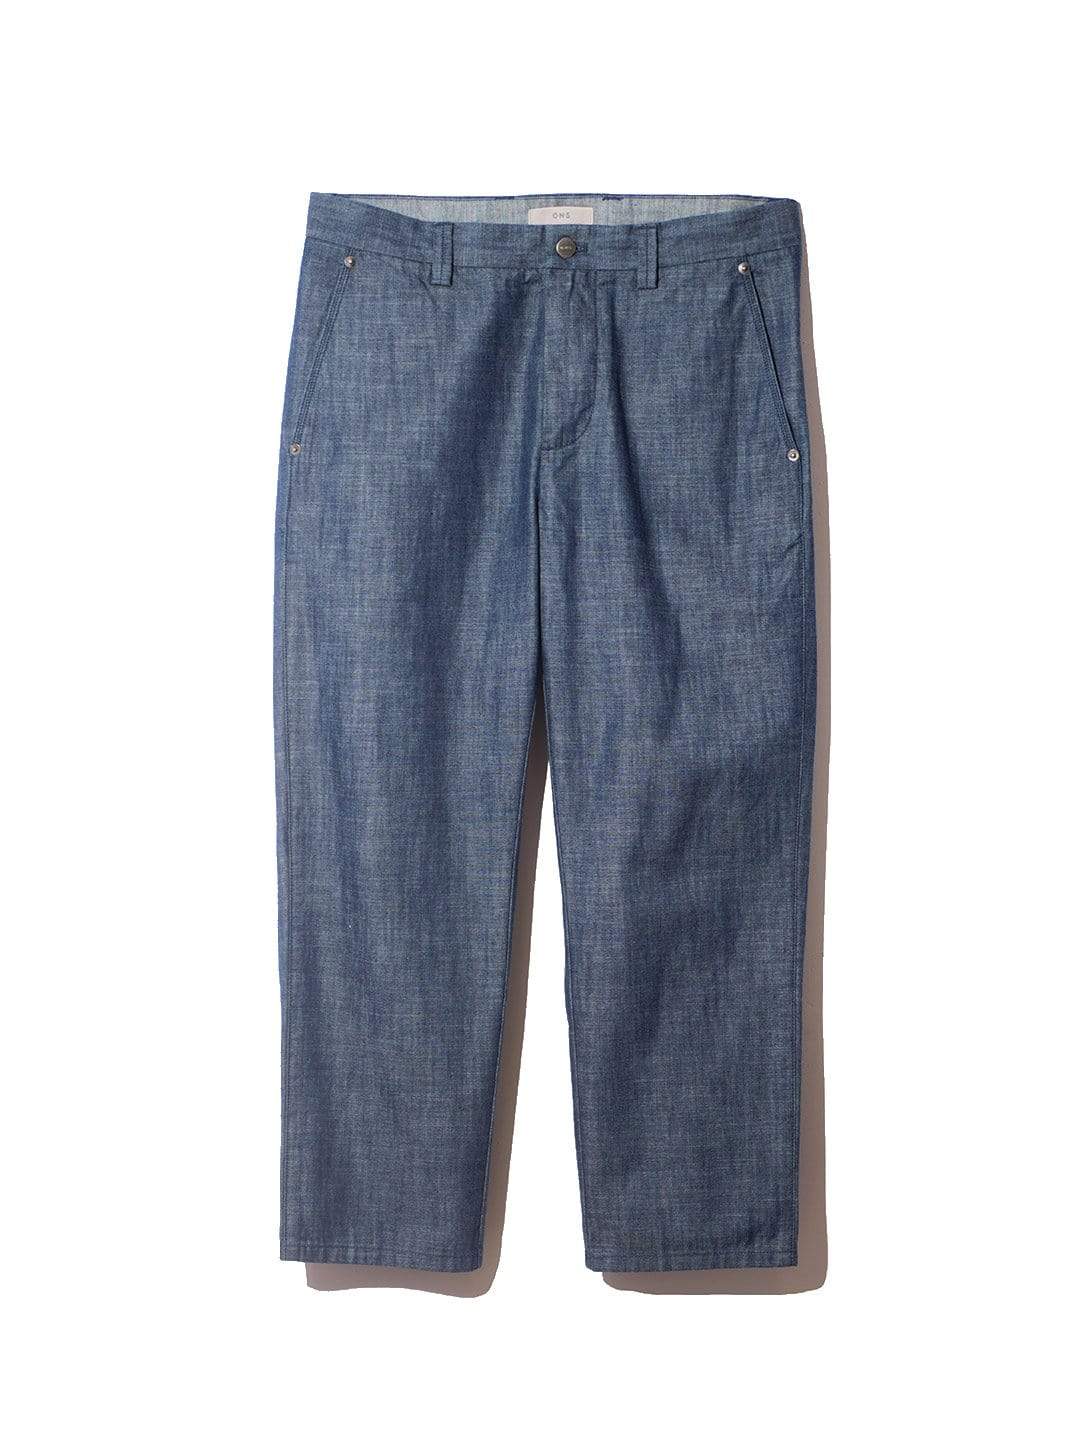 Image of Denim Trouser Pants Indigo Blue